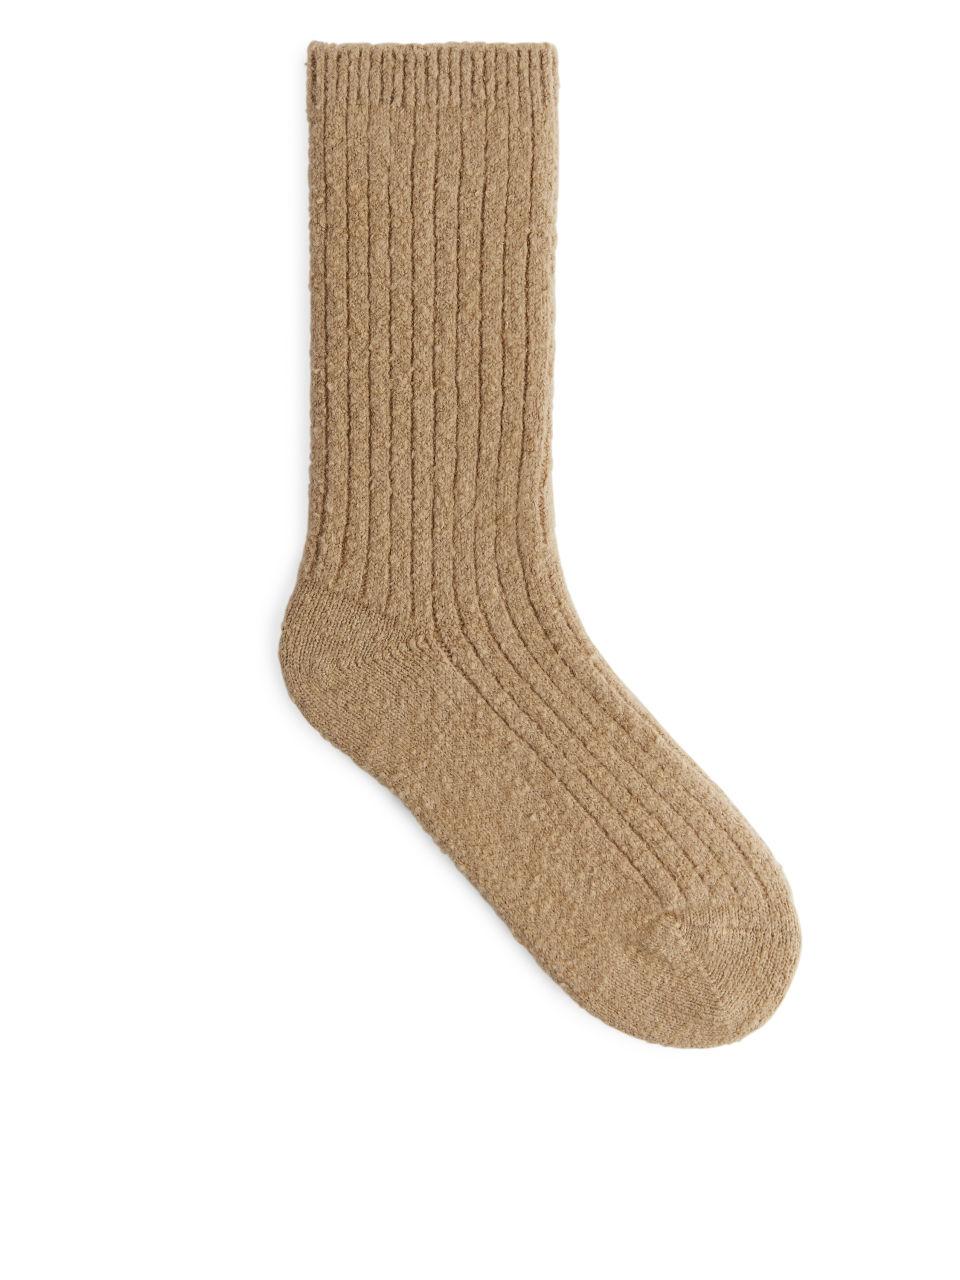 ARKET Bouclé Socks in Natural | Lyst UK